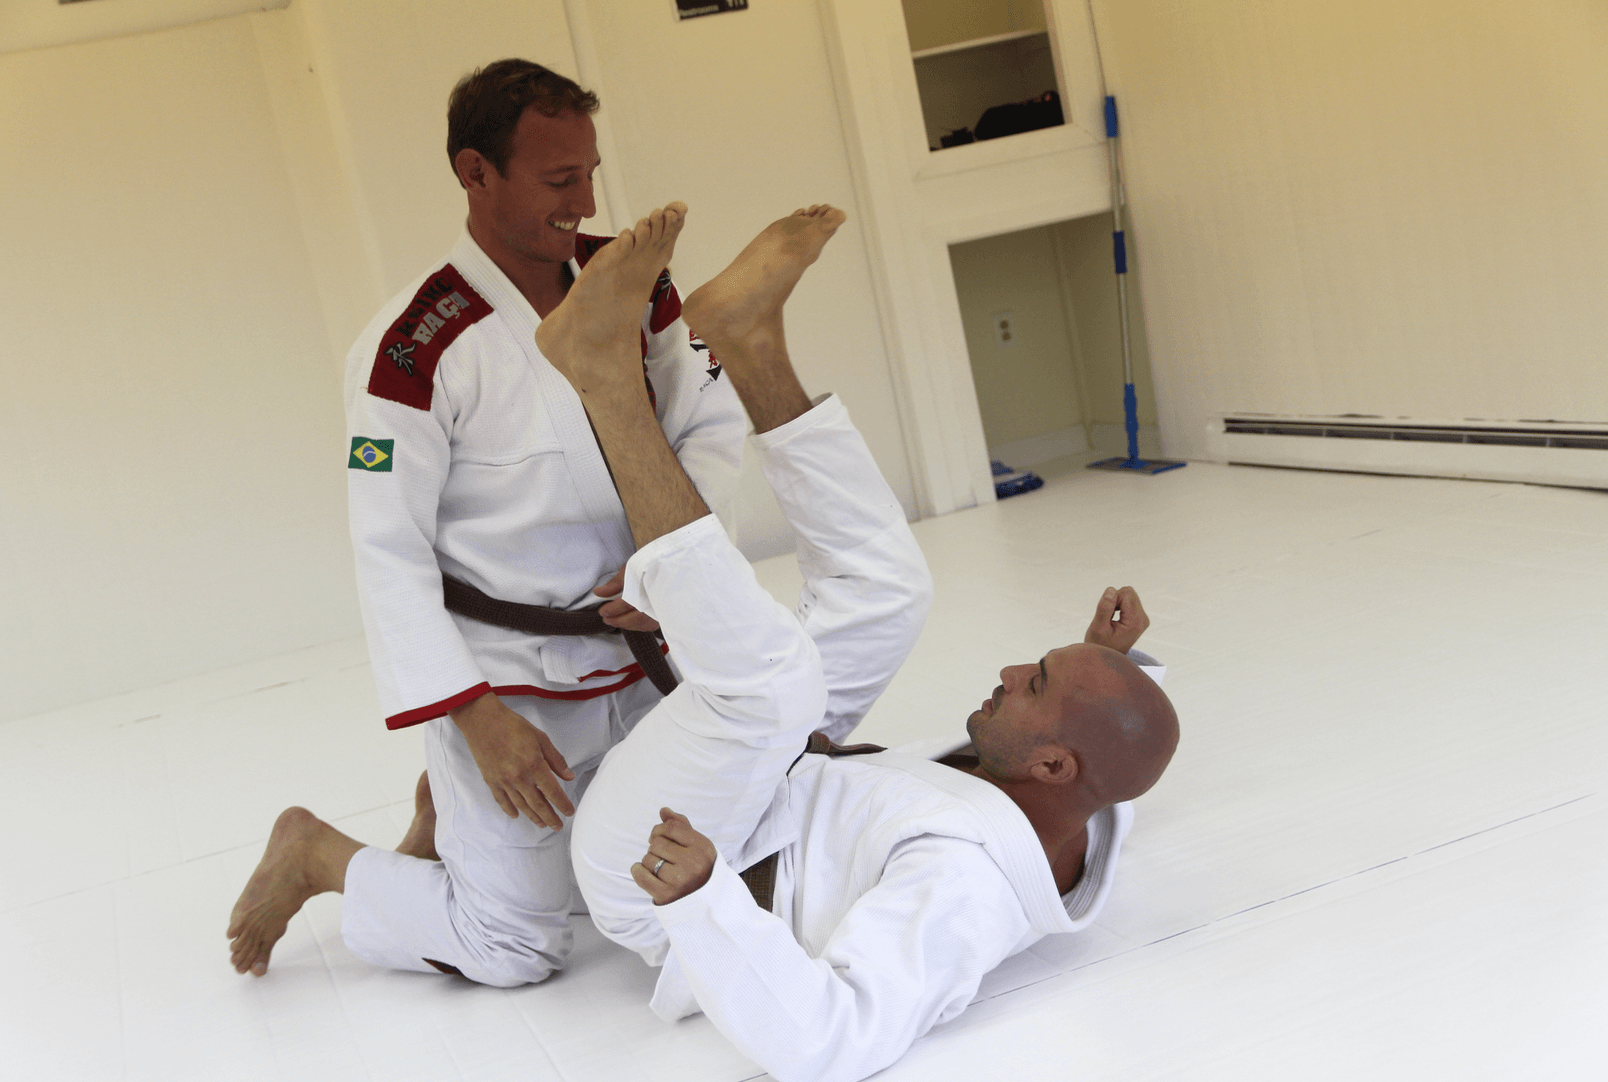 Joe Darula and Jeff Morris grappling on the mat at Greenwich Jiu-Jitsu Academy. Sept 18, 2018 Photo: Leslie Yager